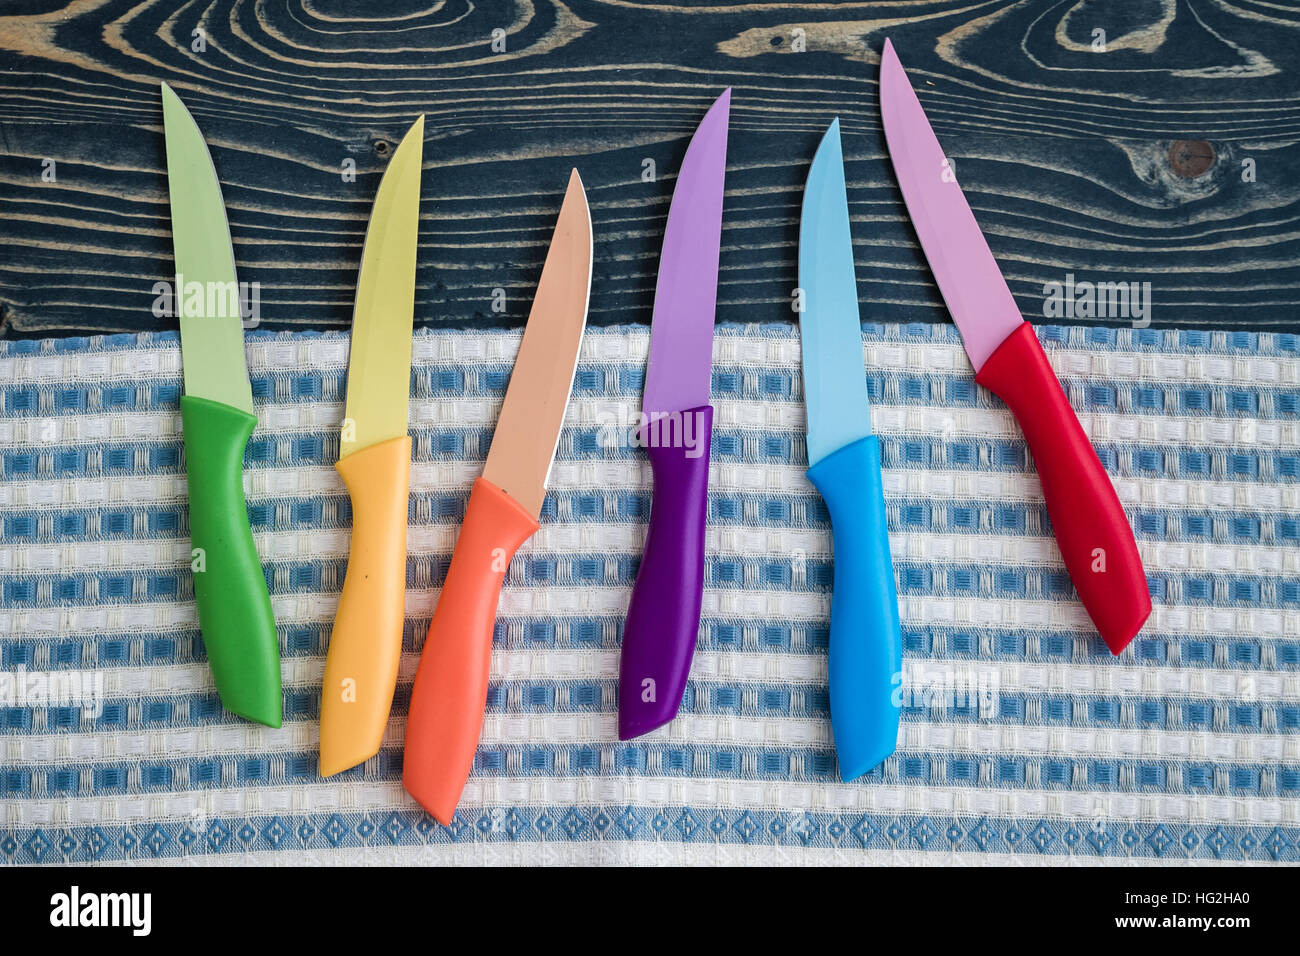 Set of Colorful Kitchen Knives on kitchen napkin Stock Photo